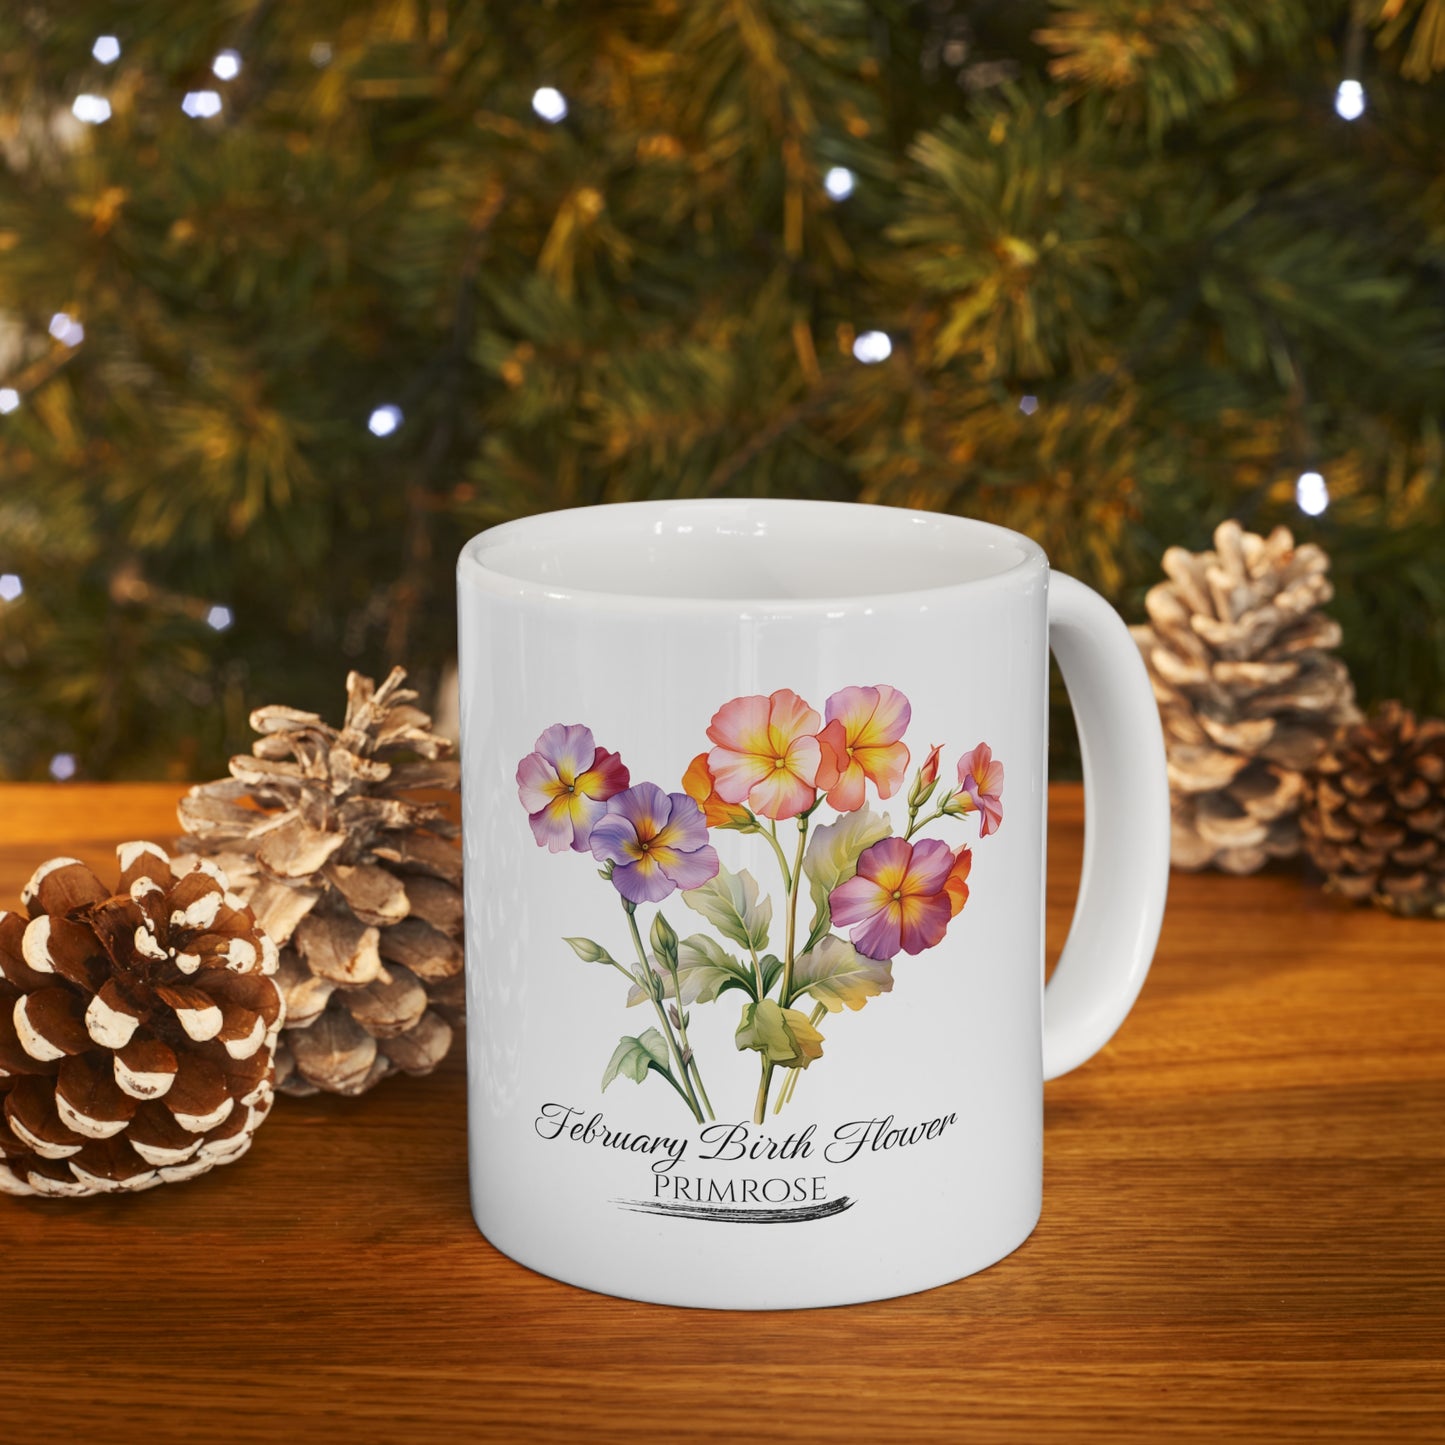 February Birth Flower (Primrose): Ceramic Mug 11oz